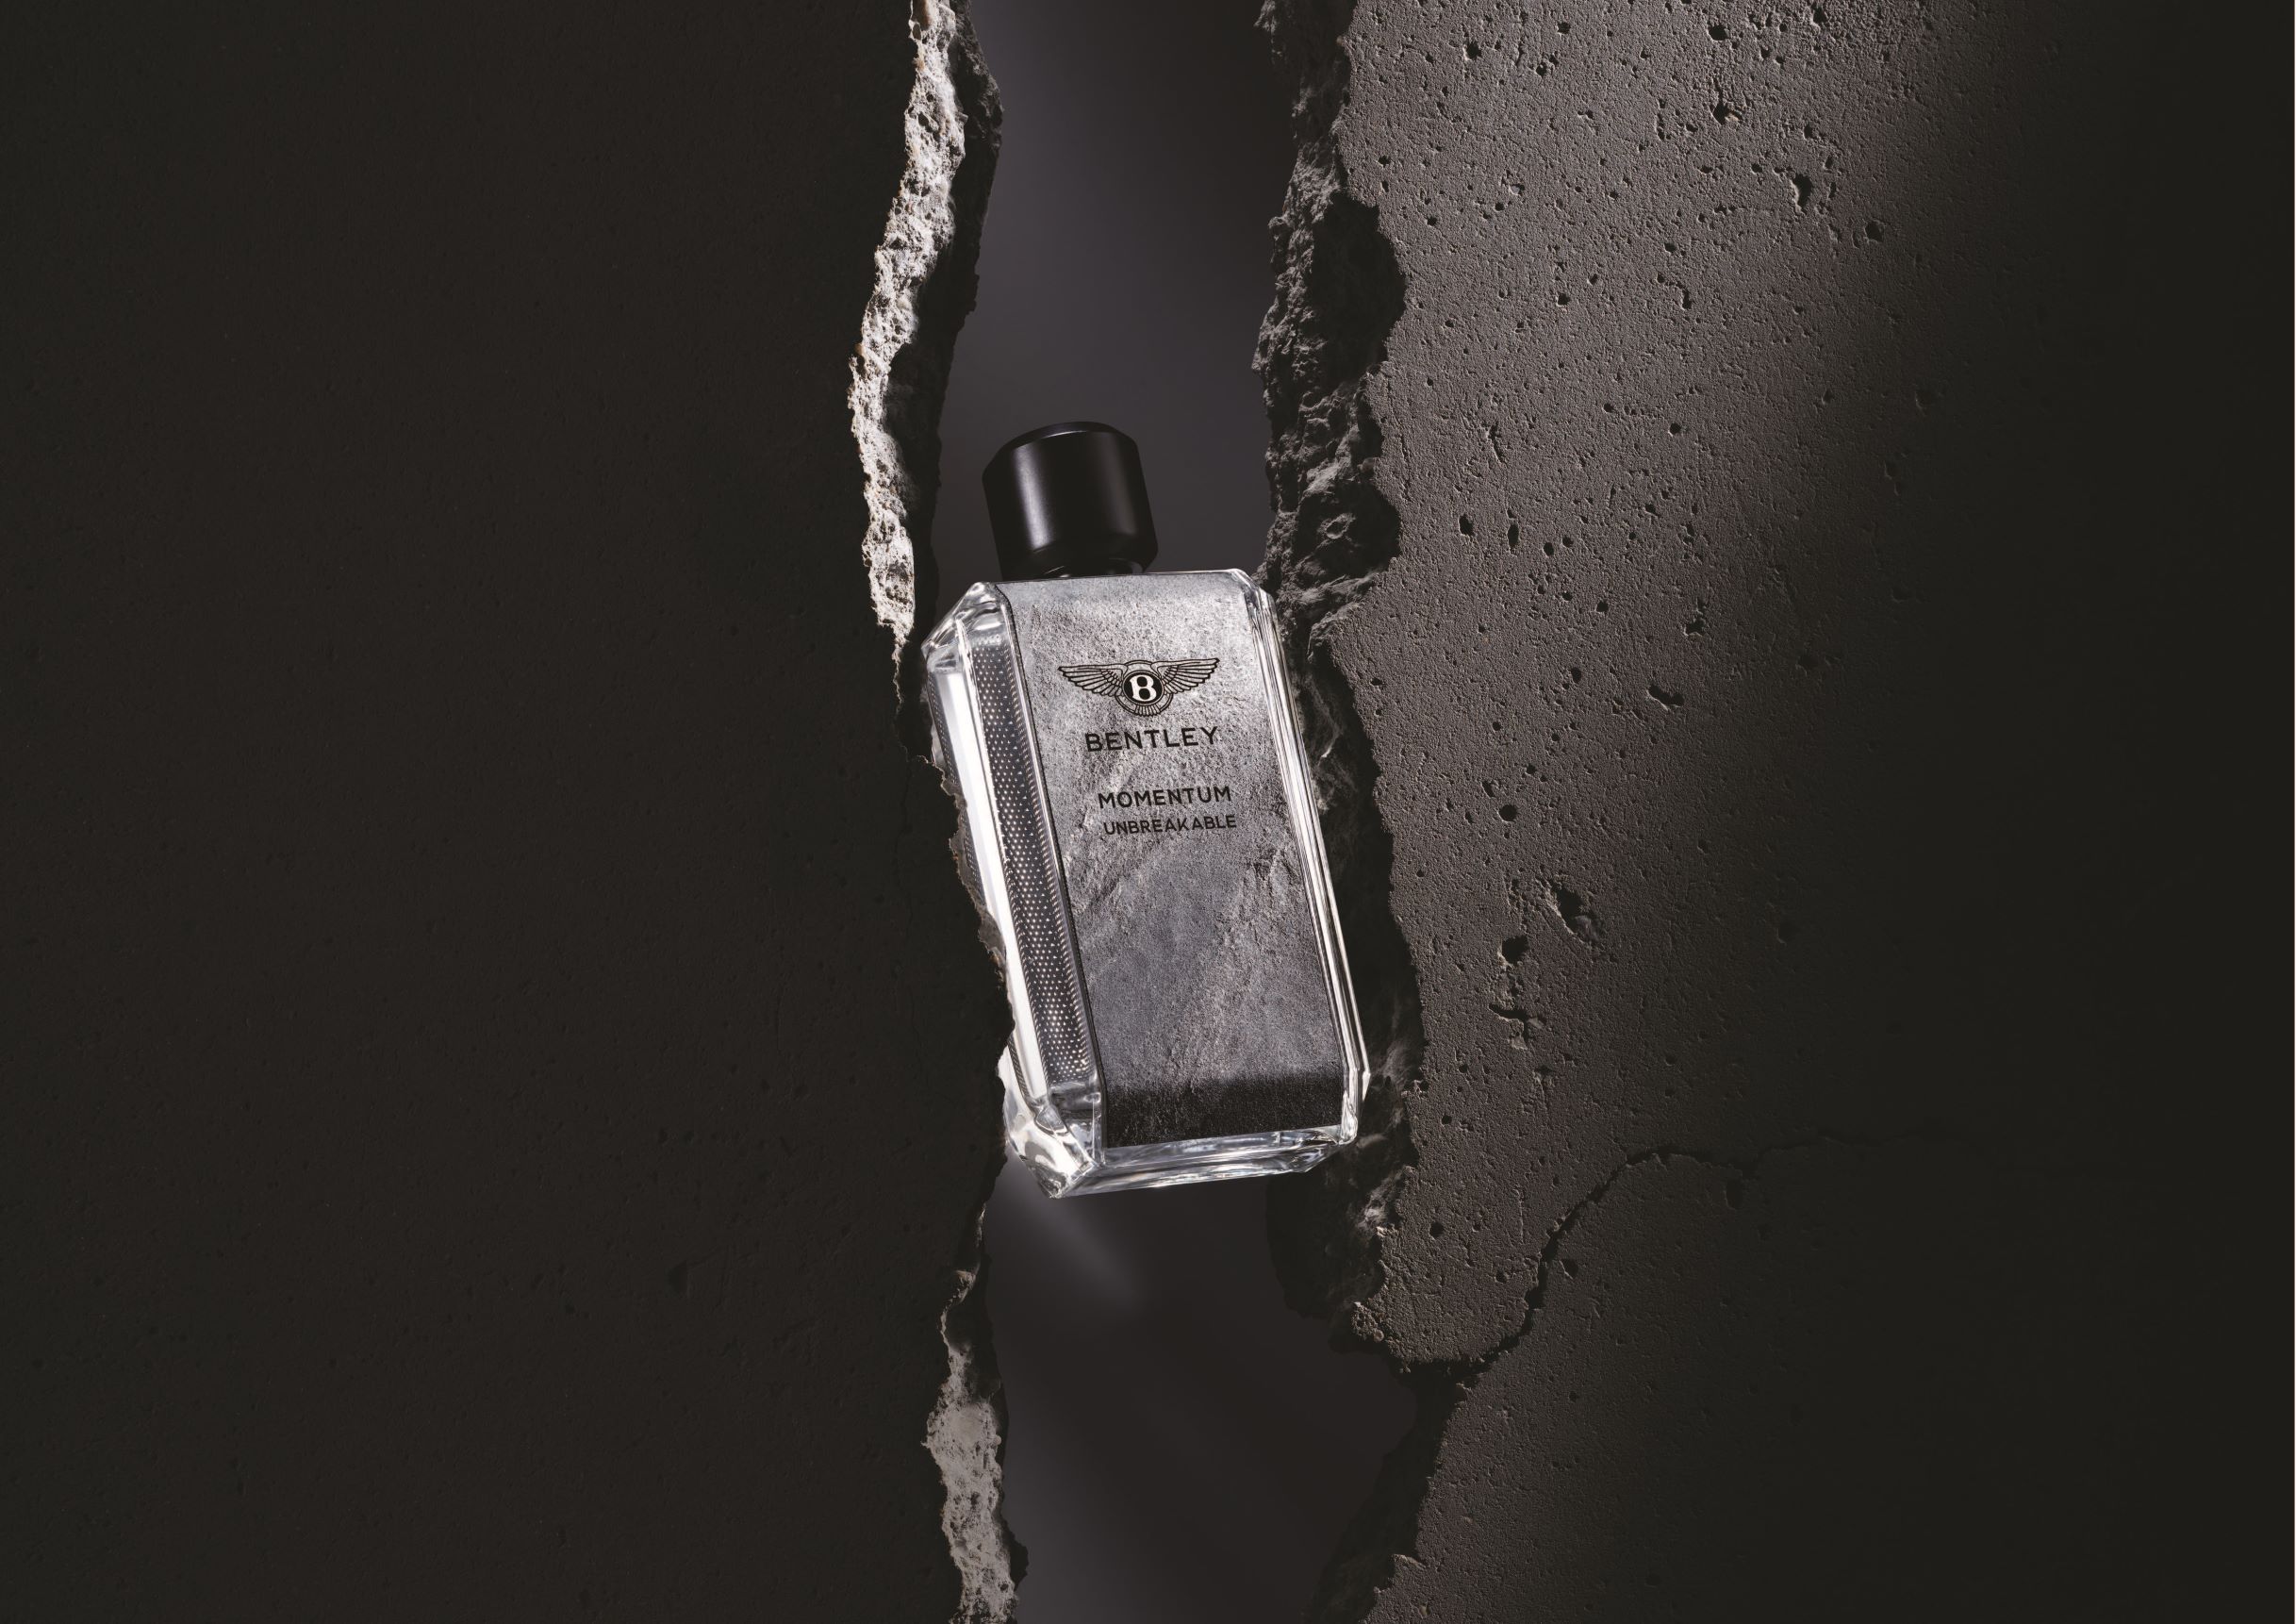 A photo of a bottle of Bentley Momentum Unbreakable Eau de Parfum.